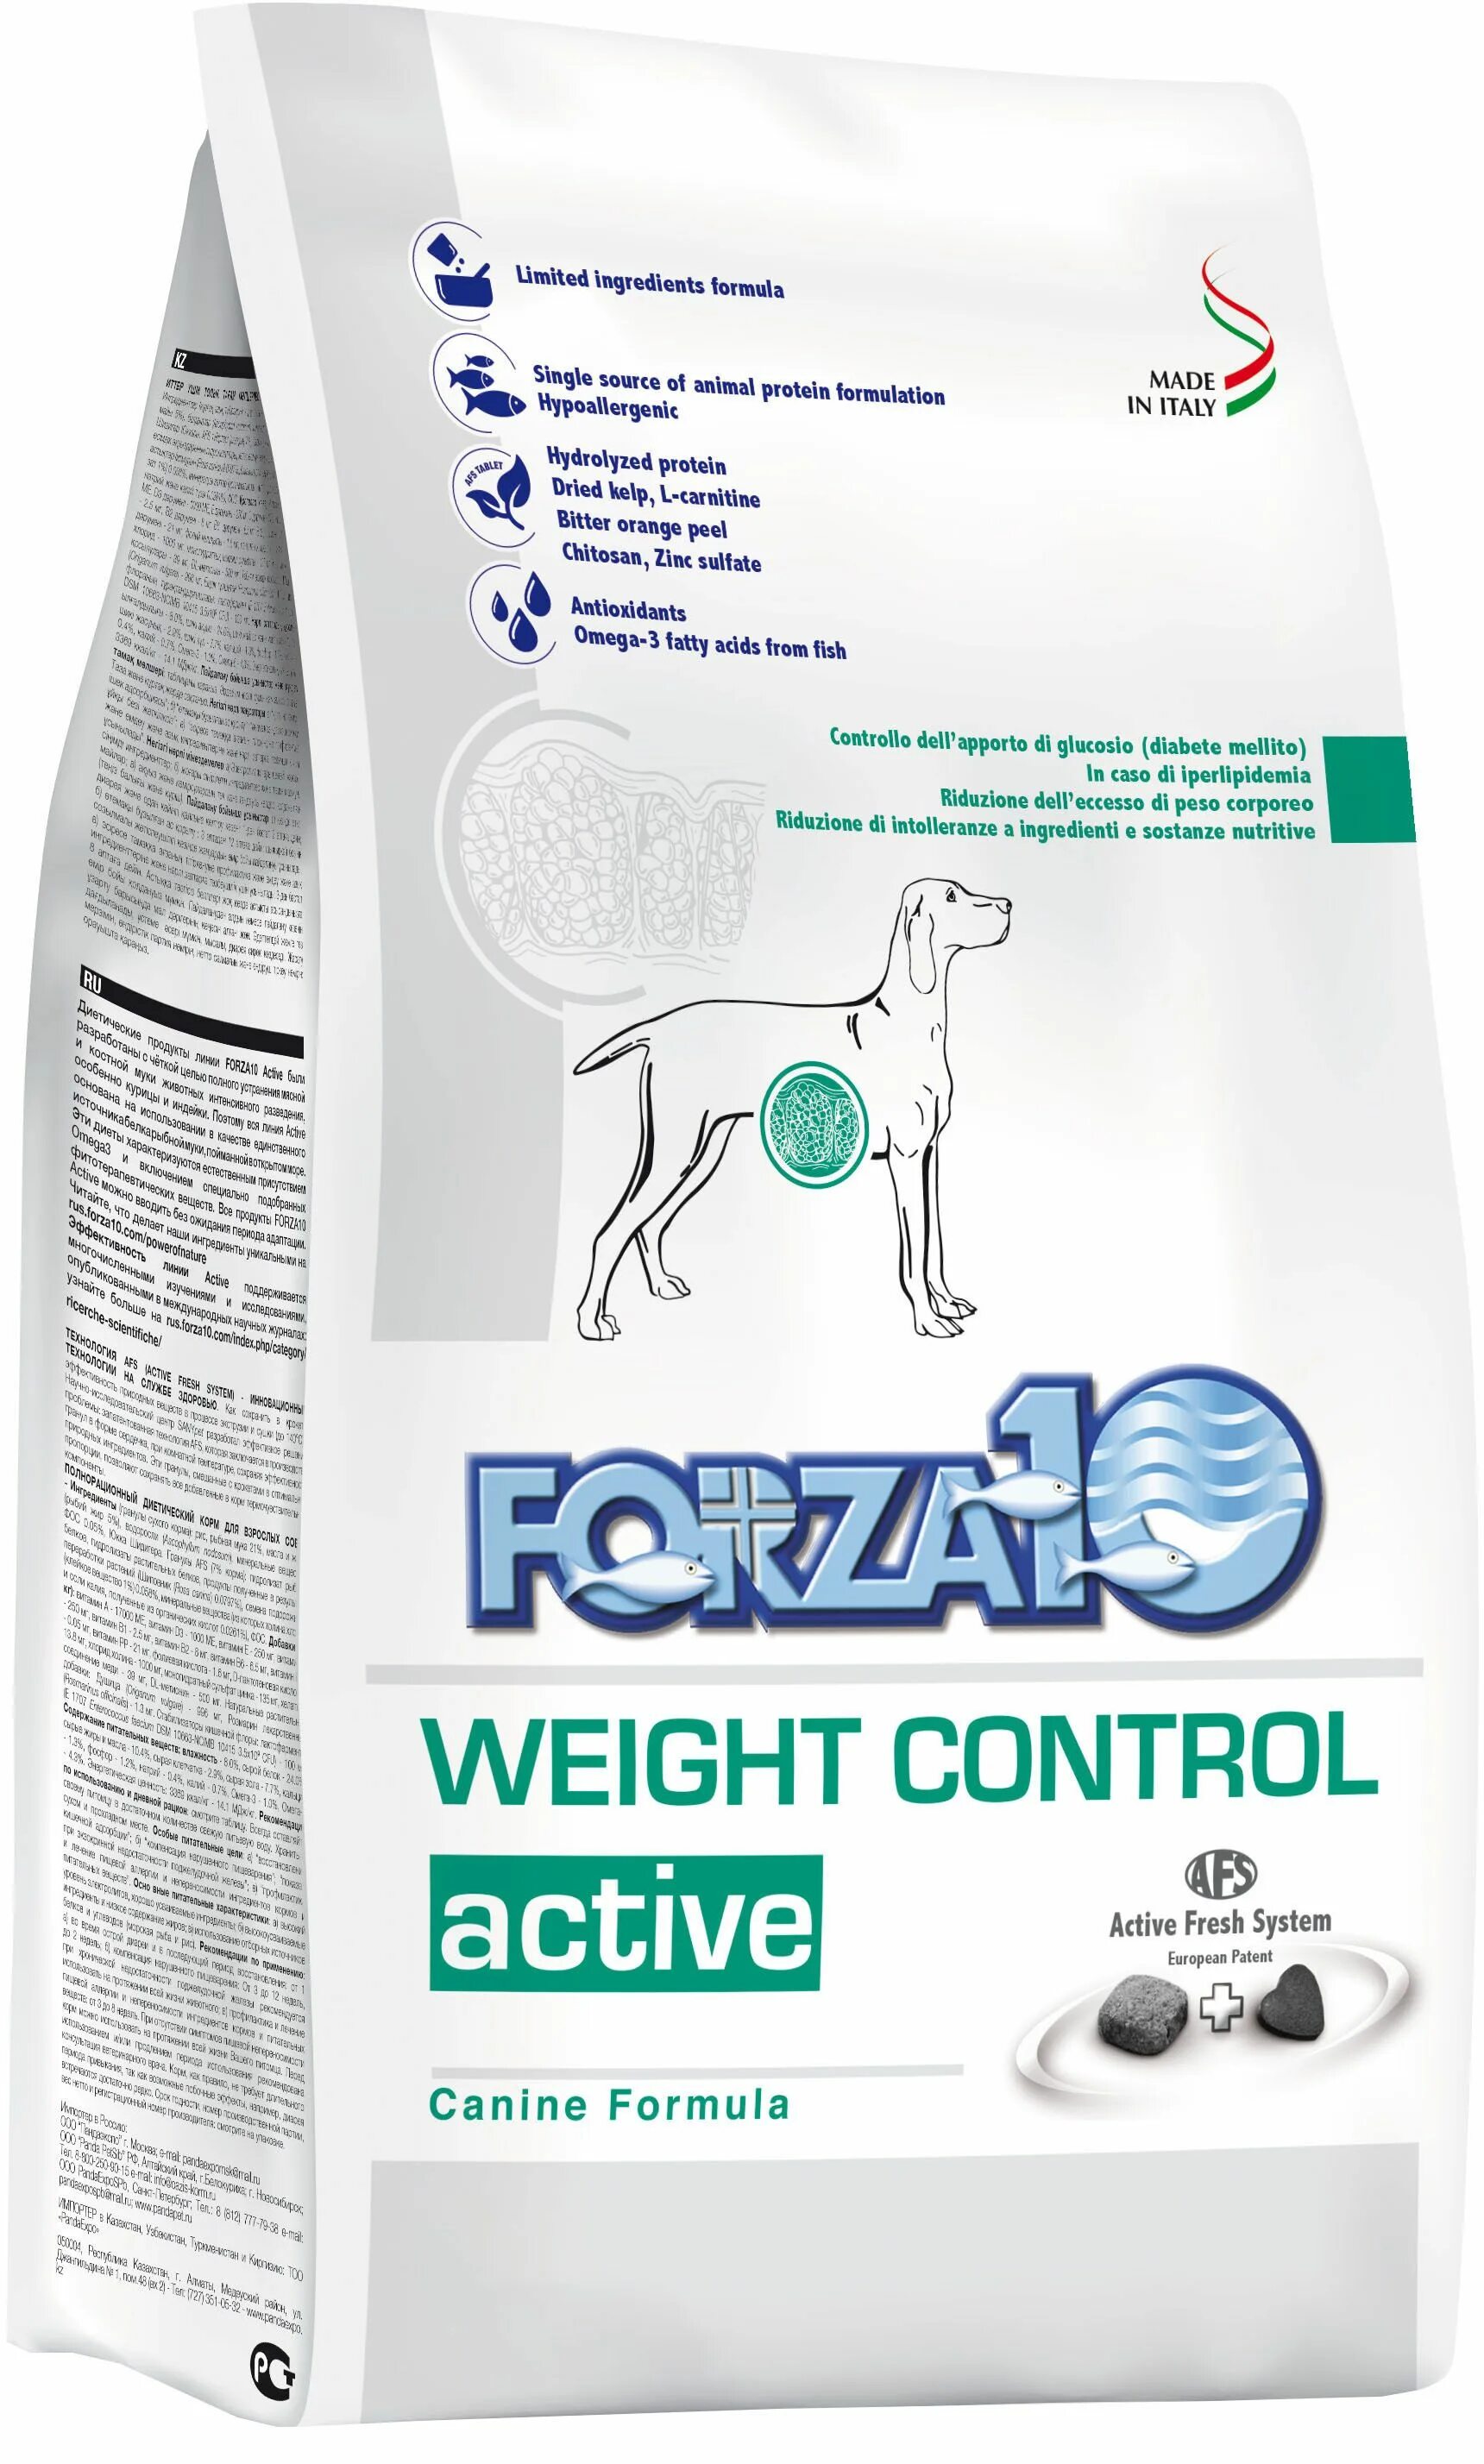 Корм forza10 Active Weight Control для собак. Корм для собак forza10 Oto 4 кг. Forza 10 корм для собак. Forza10 Active line Weight Control canine гранулы. Forza10 active